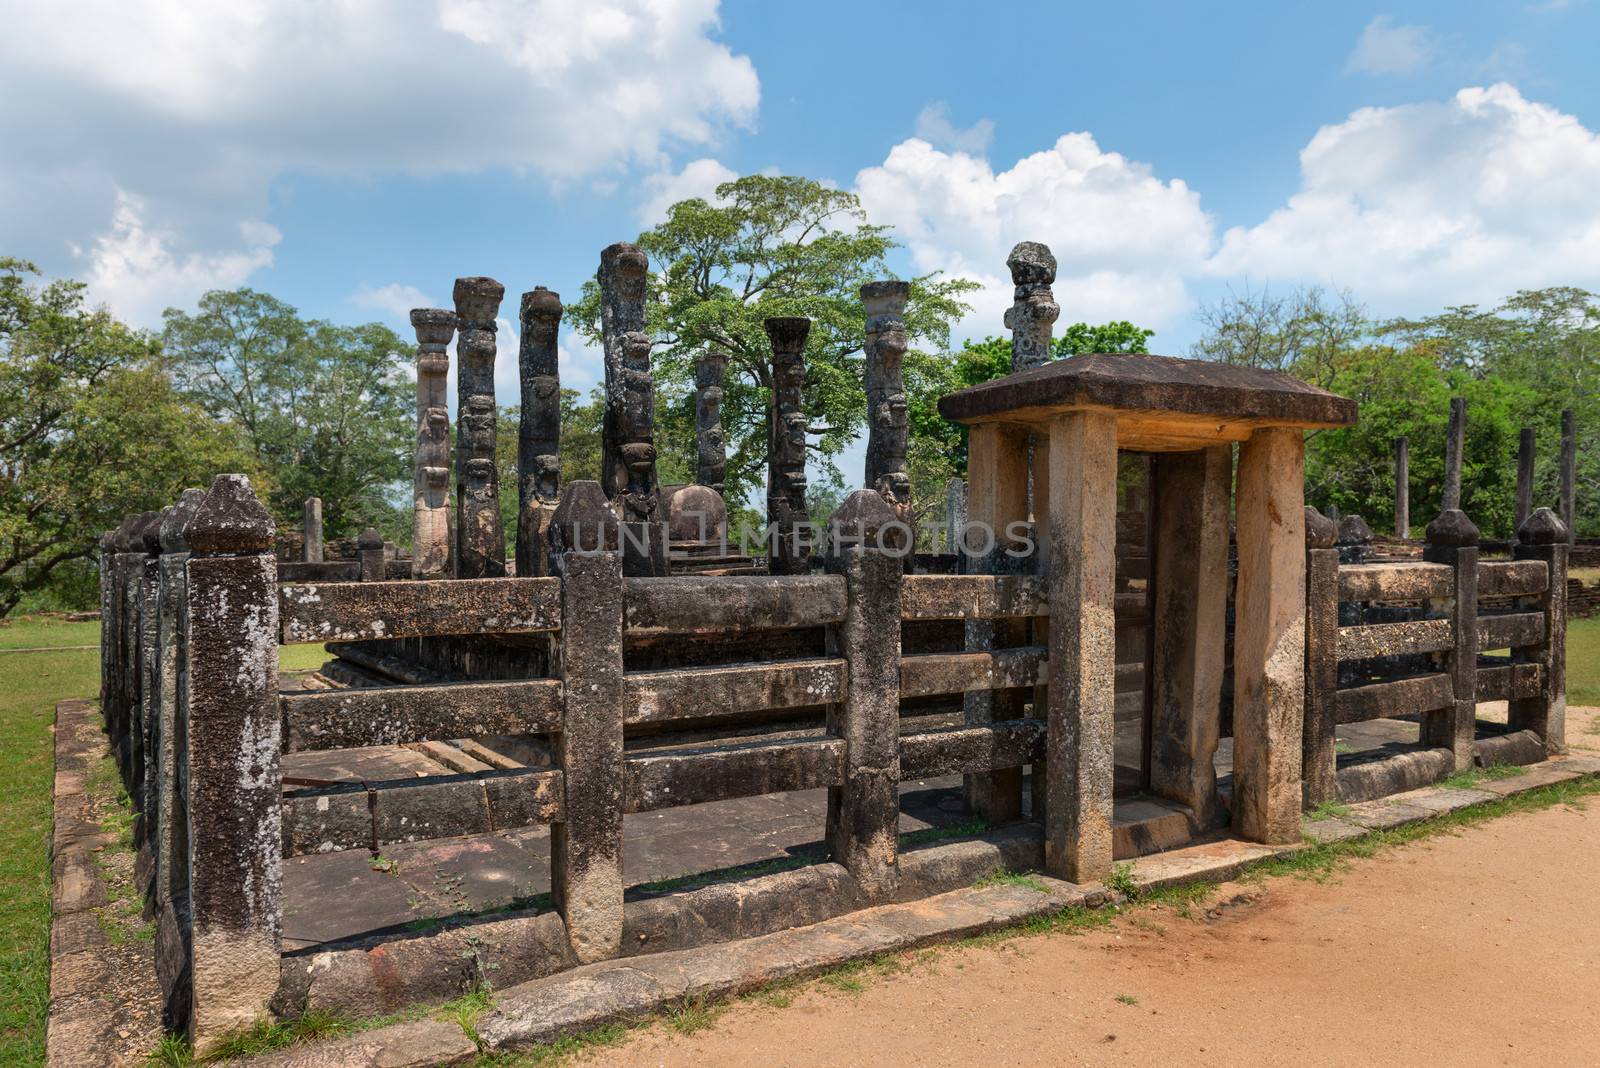 Lovely little pavilion Nissankalata Mandapa with eight pillars carved in imitation of lotus stalks, Polonnaruwa, Sri Lanka